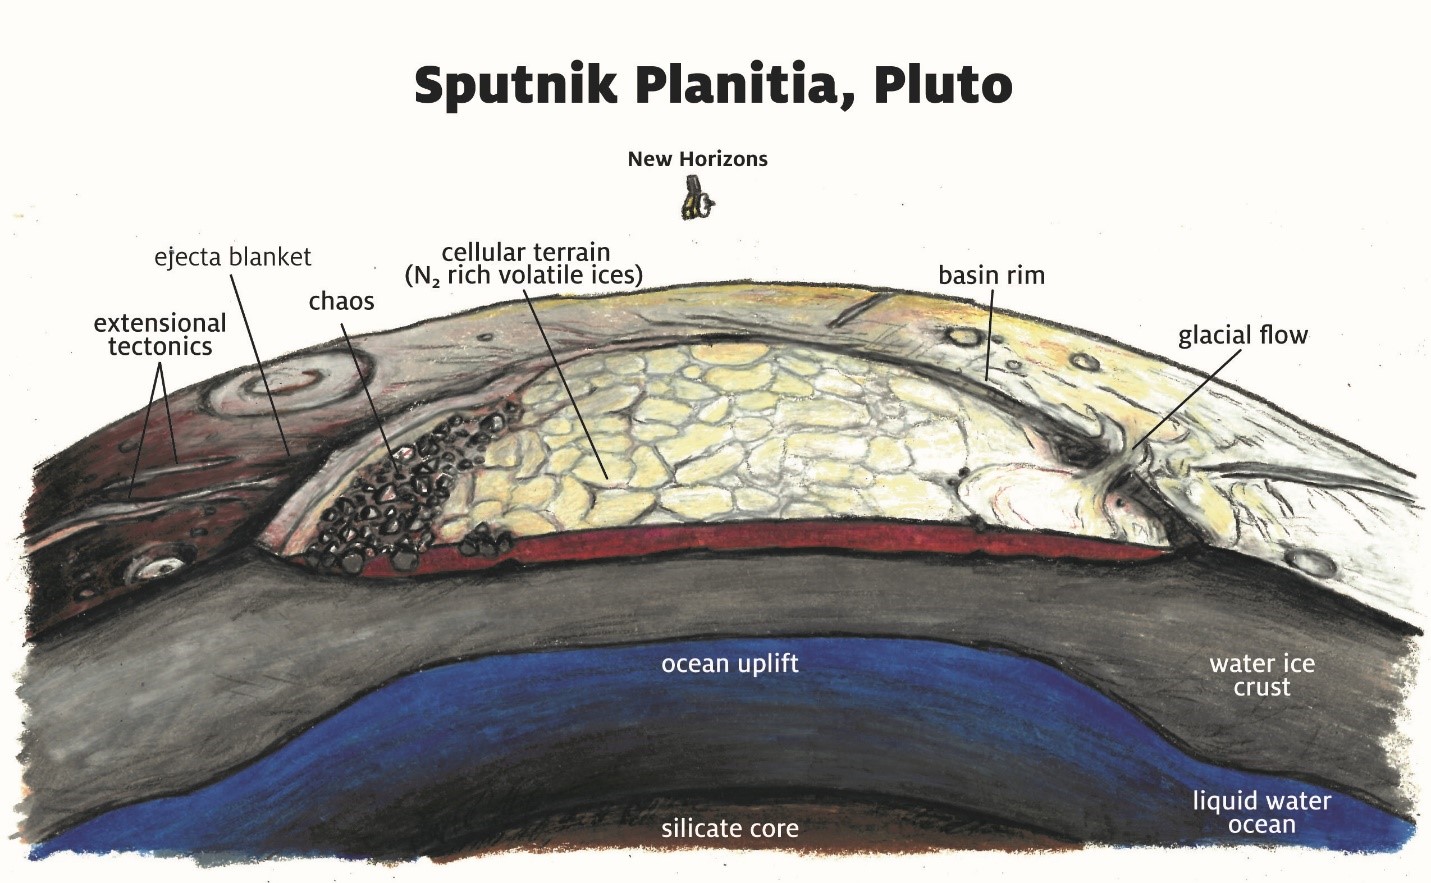 Sputnik Planitia, Pluto